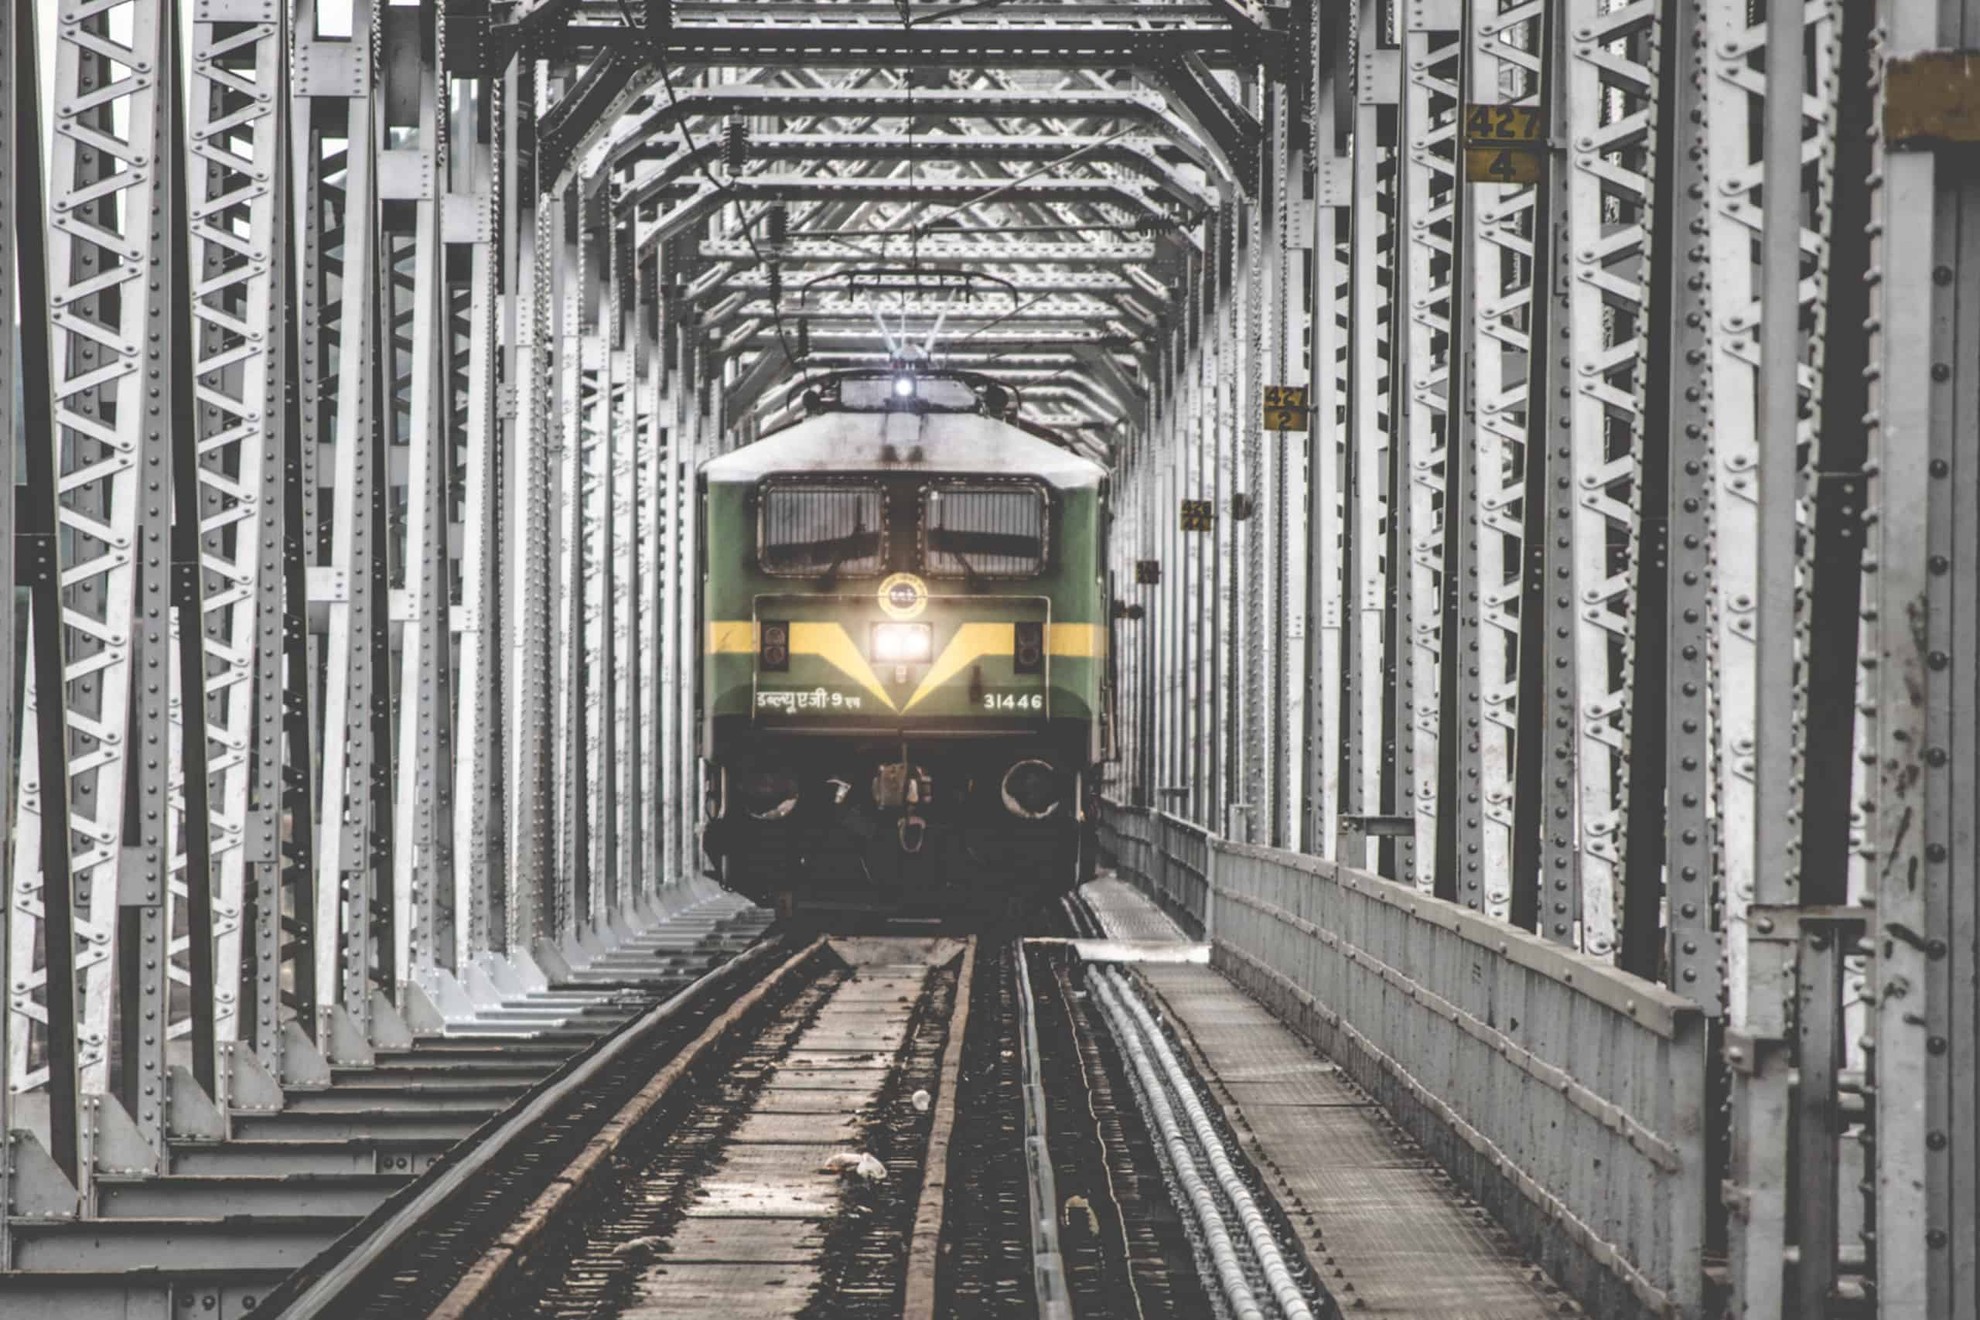 Train on the tracks